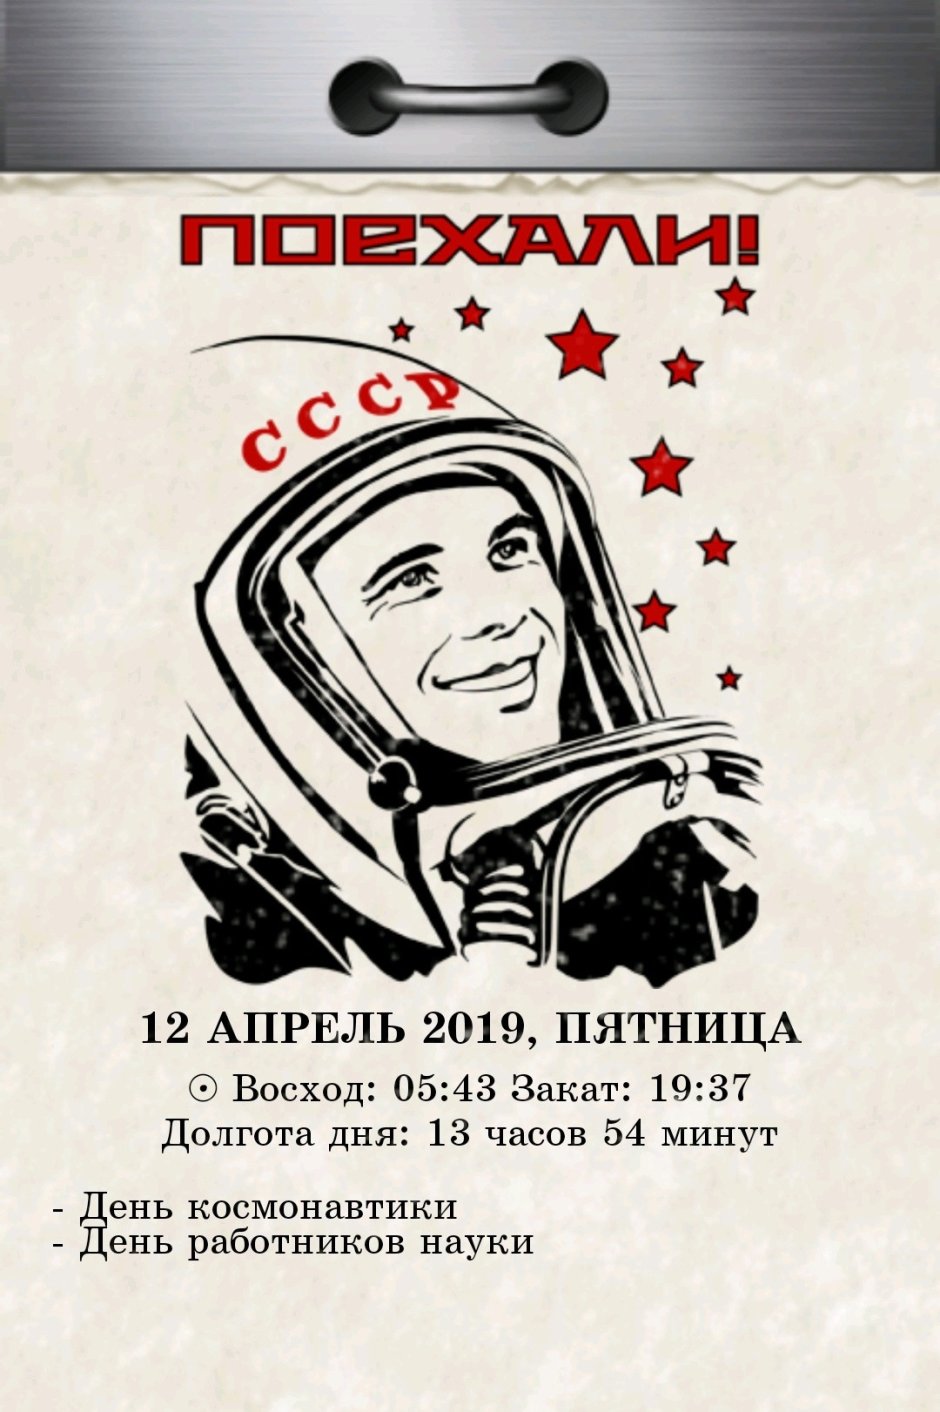 Космонавтика Юрий Гагарин